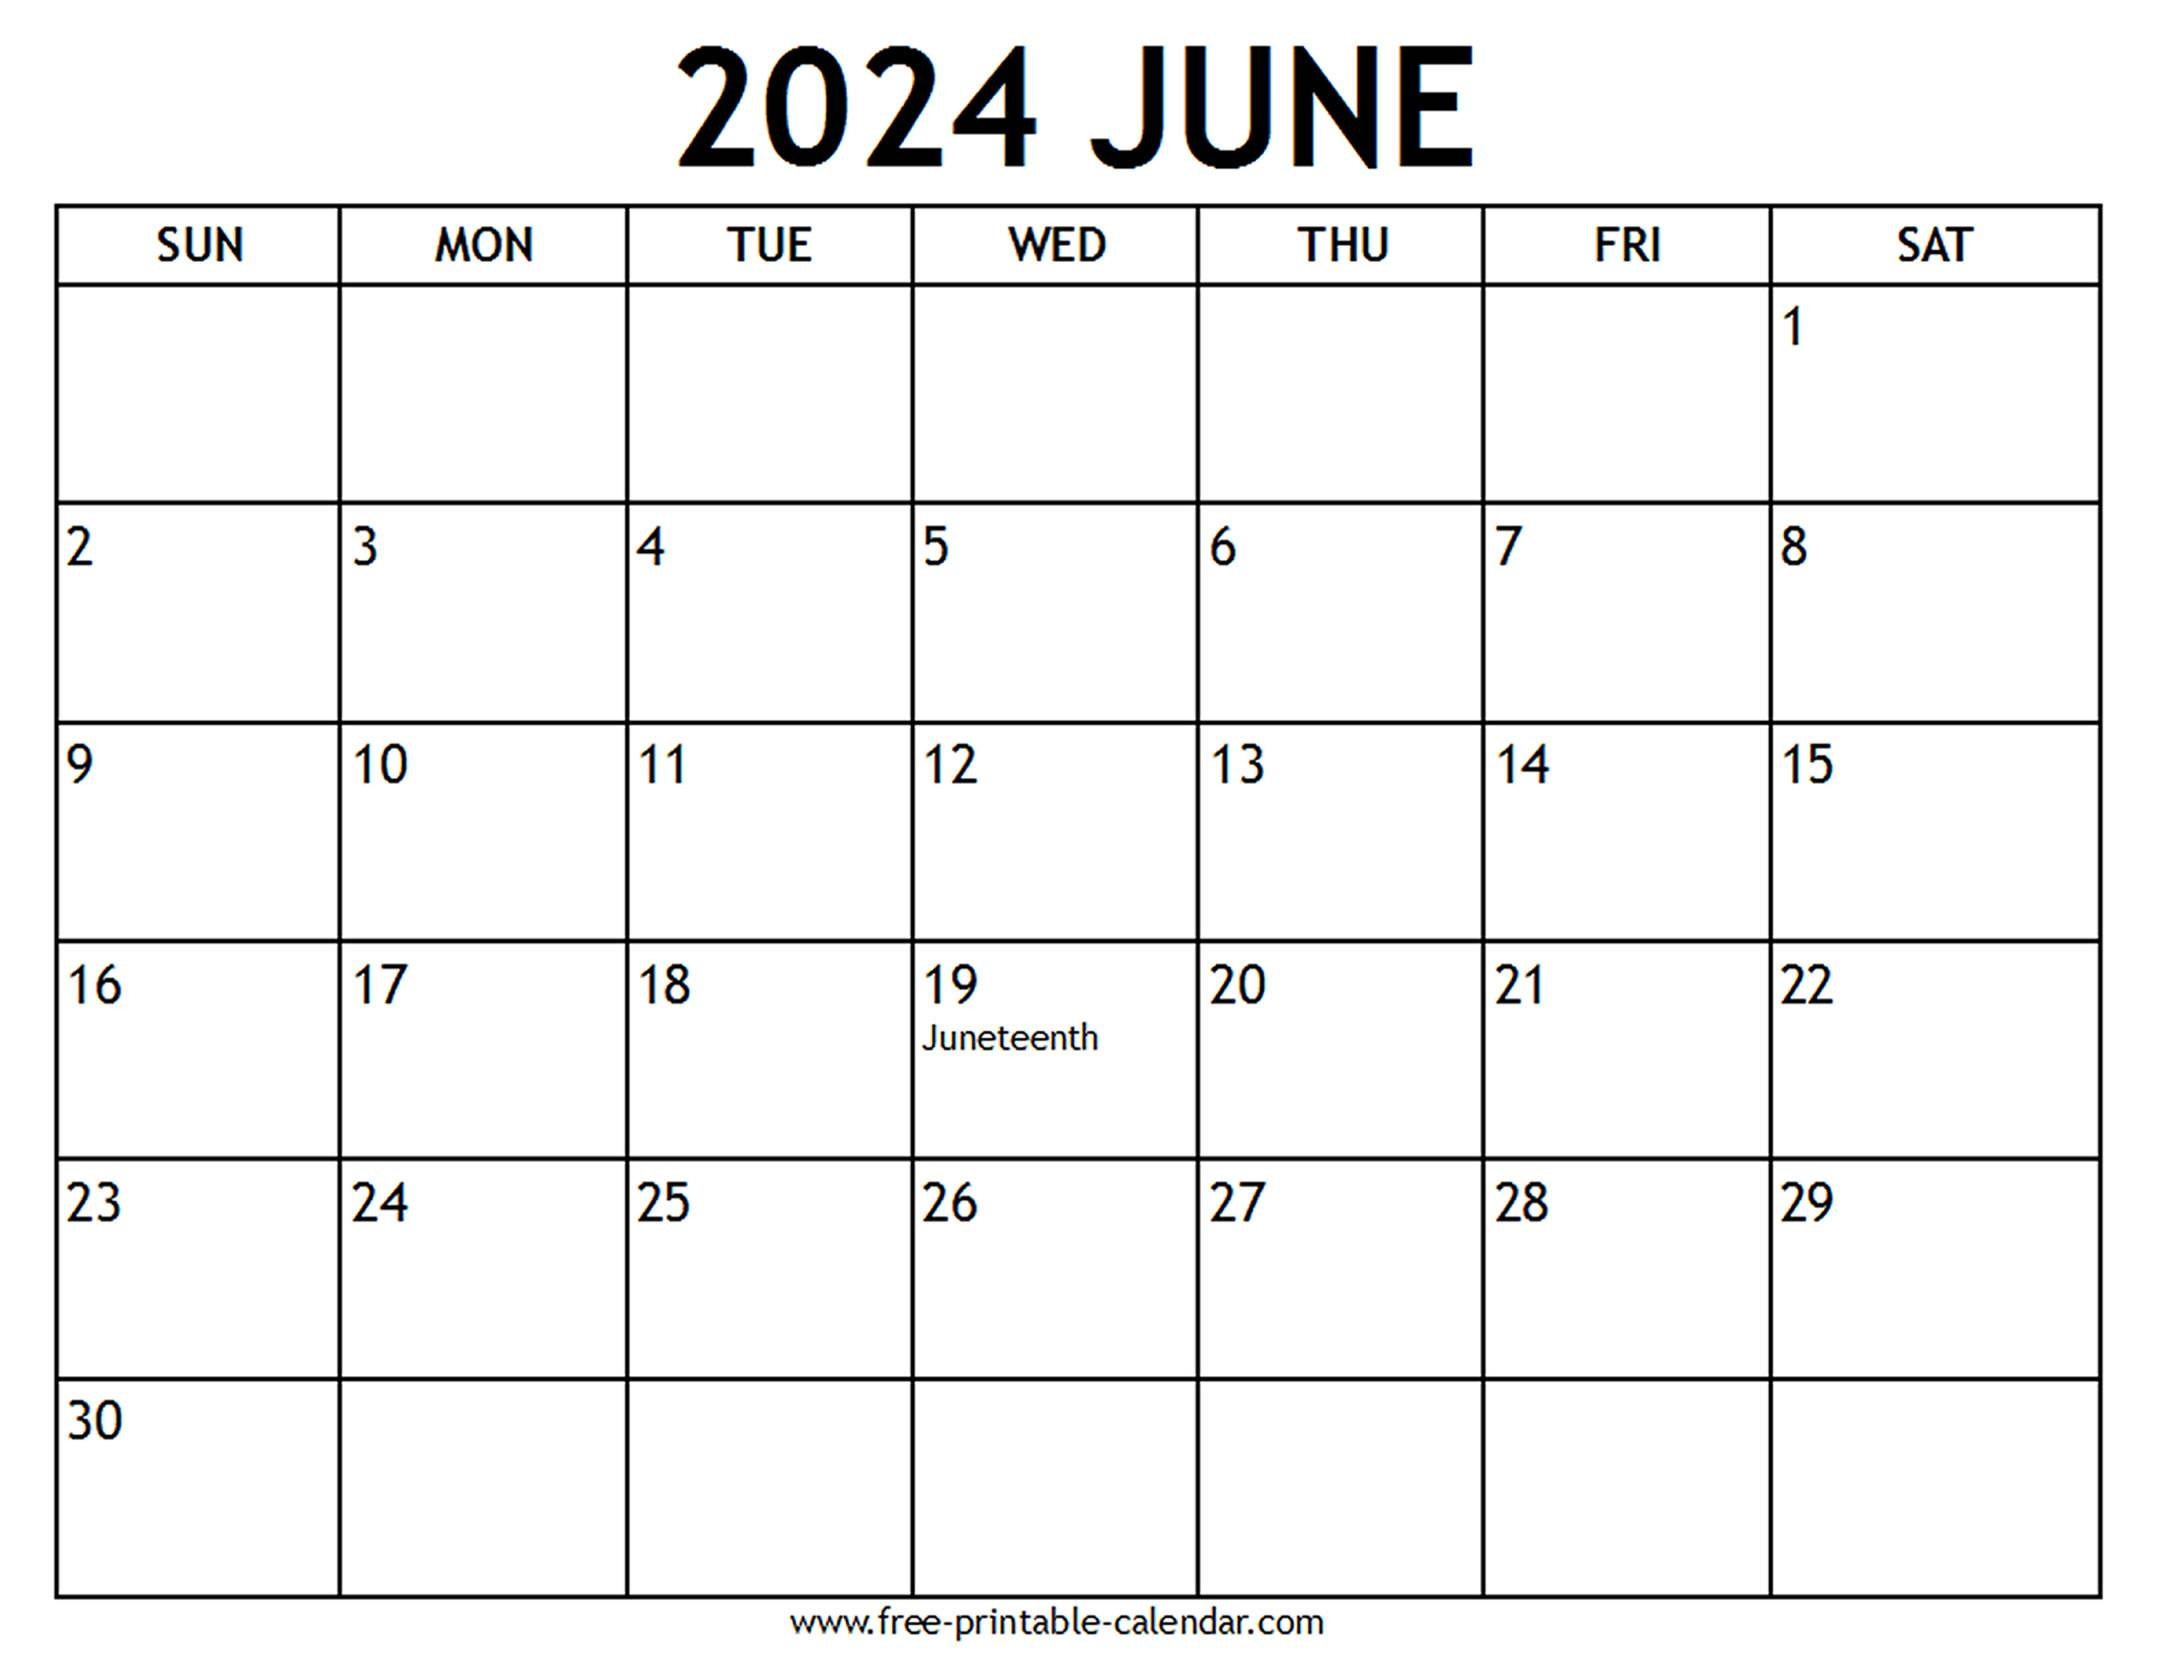 June 2024 Calendar Us Holidays - Free-Printable-Calendar intended for June Calendar 2024 With Holidays